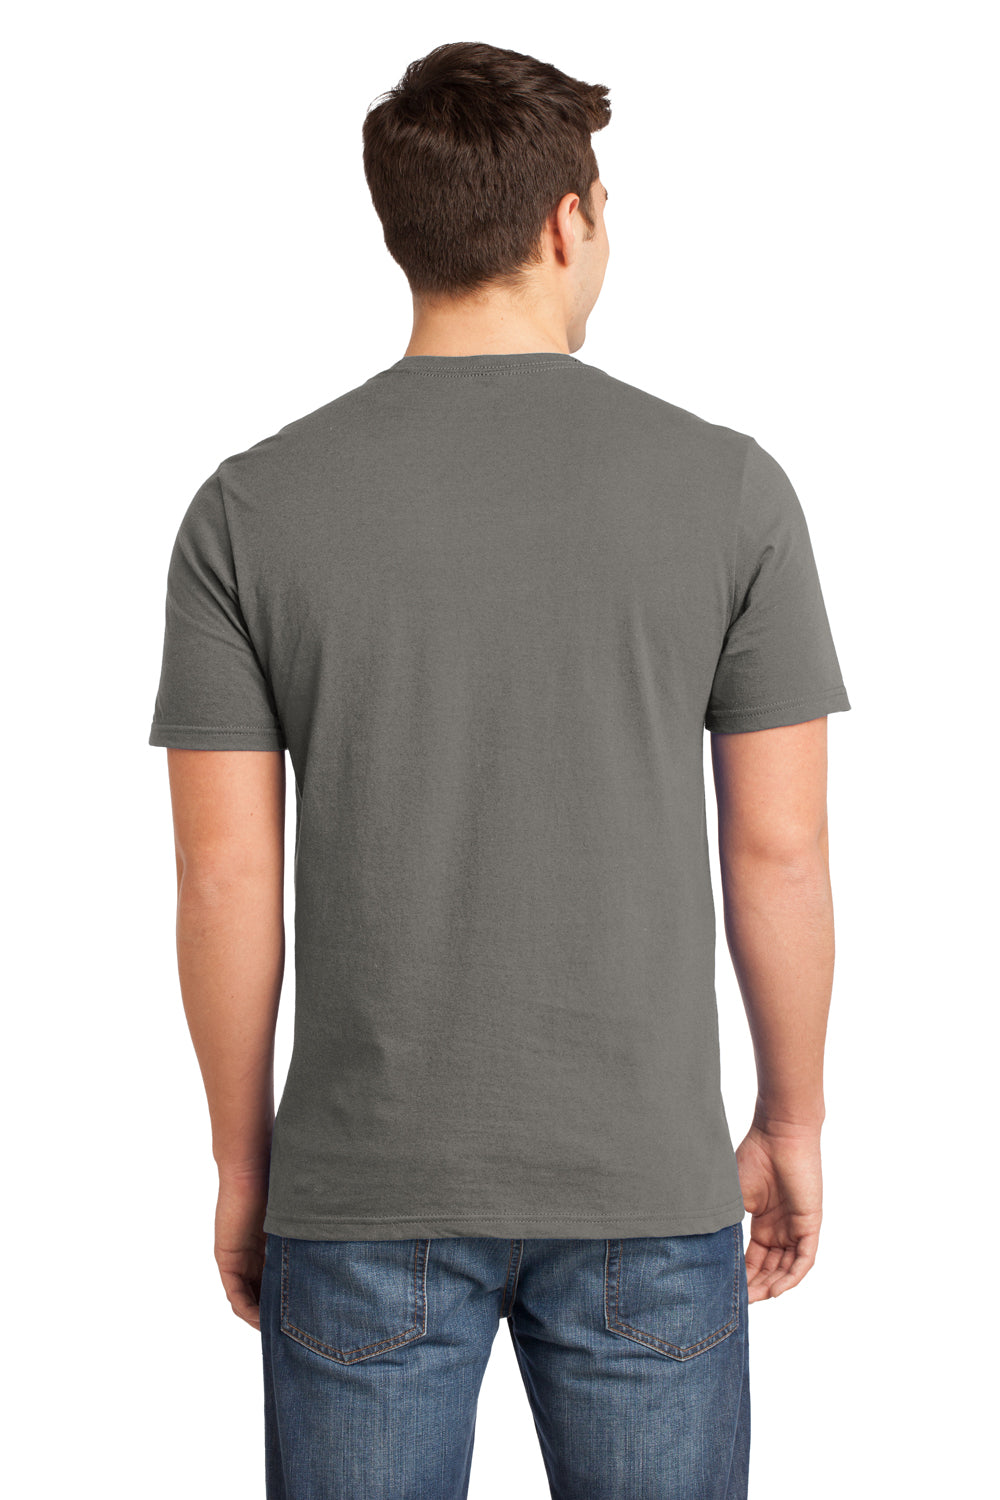 District DT6000 Mens Very Important Short Sleeve Crewneck T-Shirt Grey Back